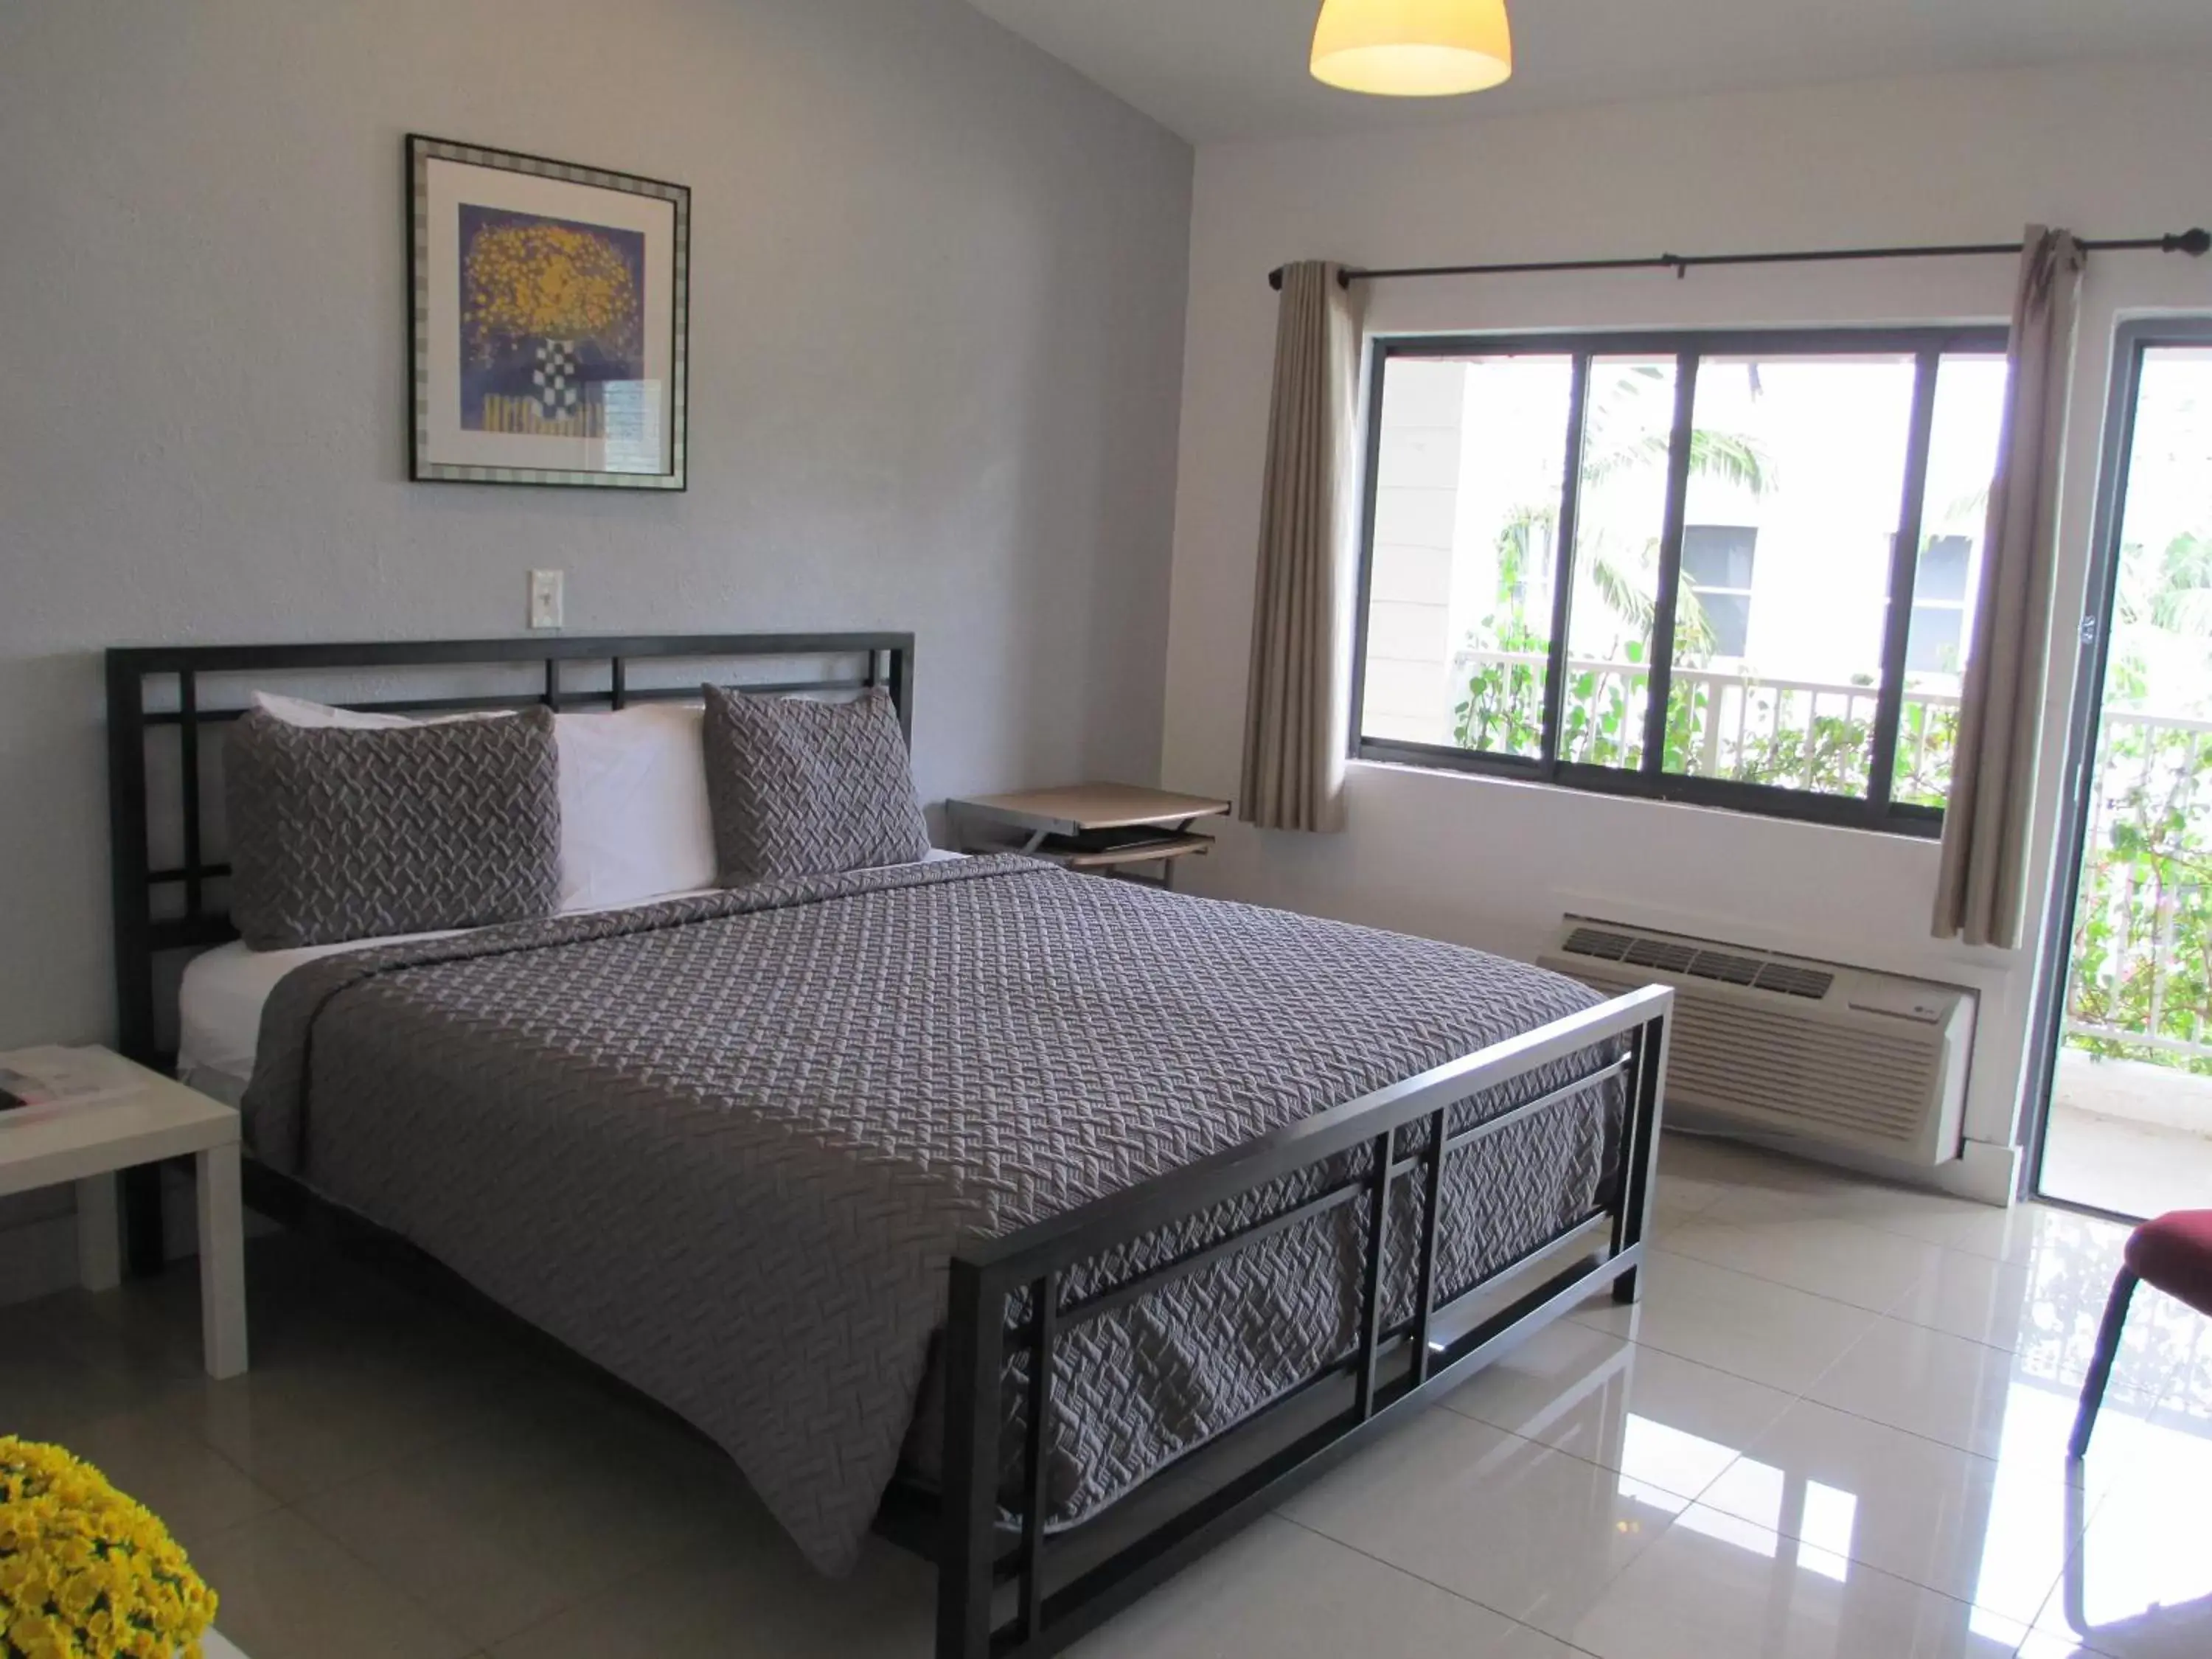 Bed, Room Photo in Shalimar Motel